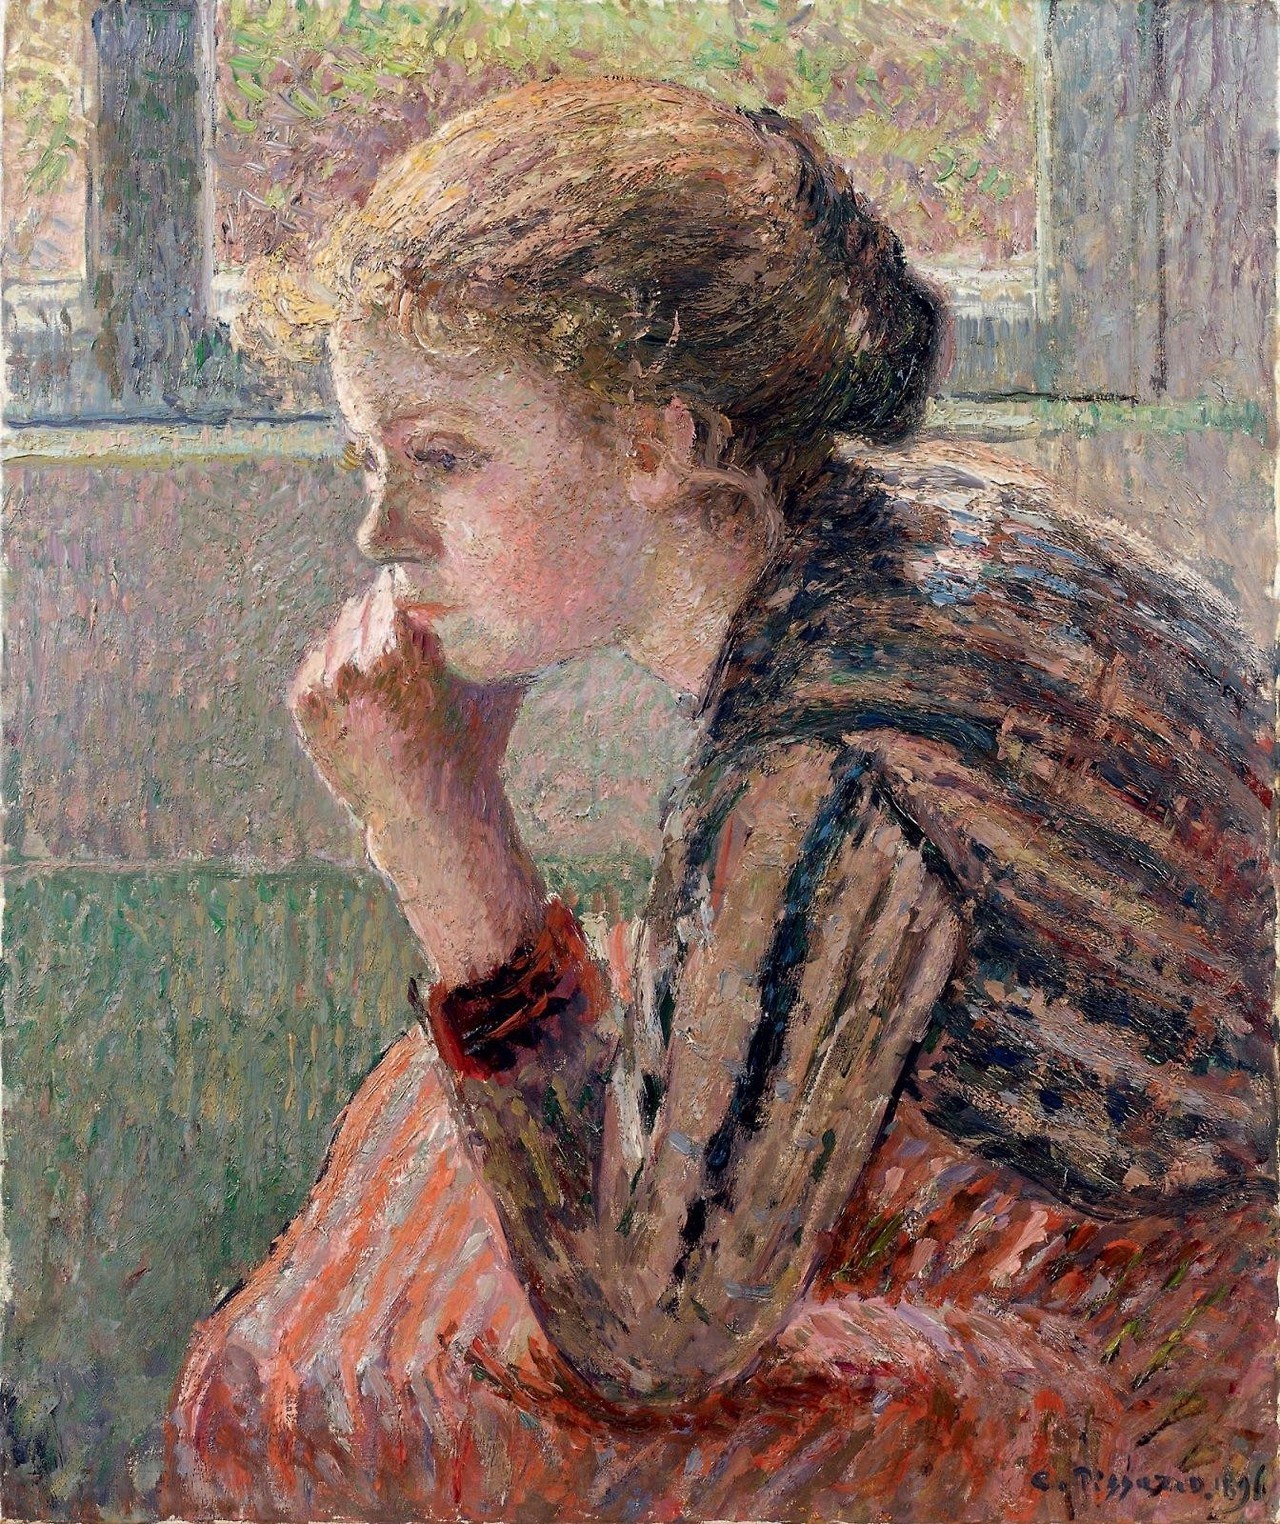 urgetocreate:
â€œCamille Pissarro, La Rosa, 1896, Oil on canvas
â€